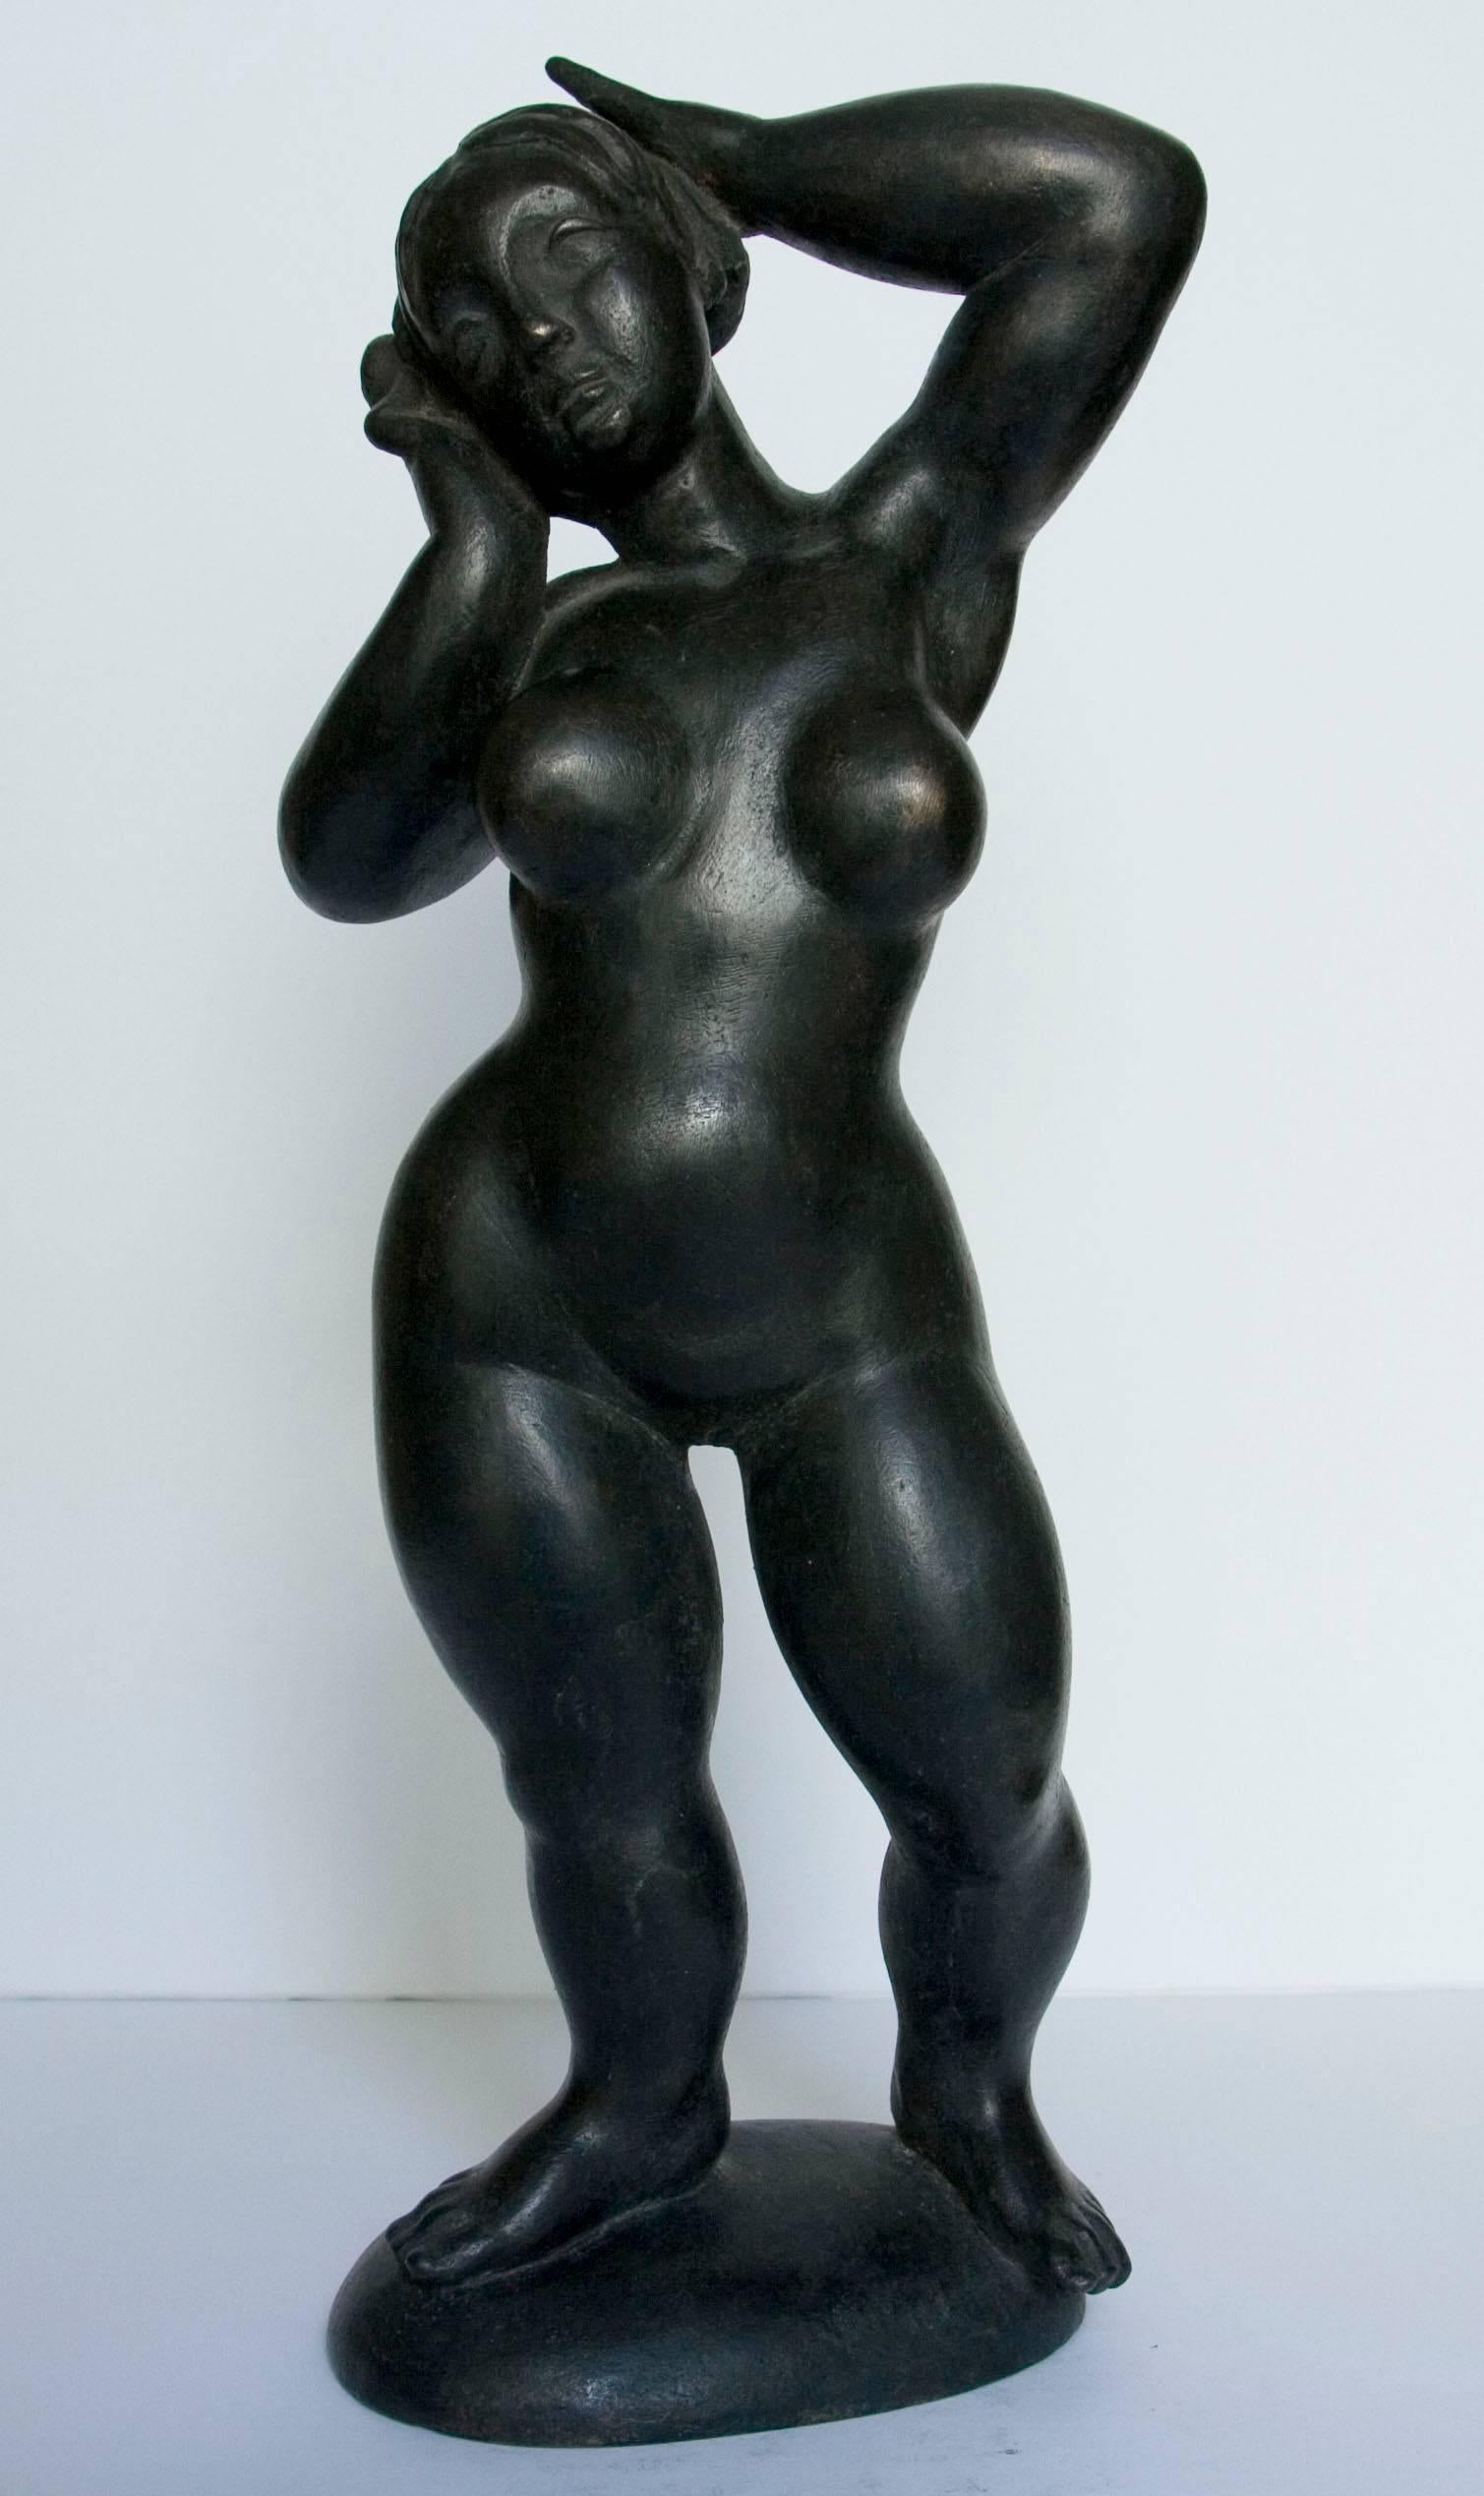 Giovanni Rindler Nude Sculpture - Kleine Pomina (Small Pomina) - Bronze, Female Nude, Contemporary, Austrian, 